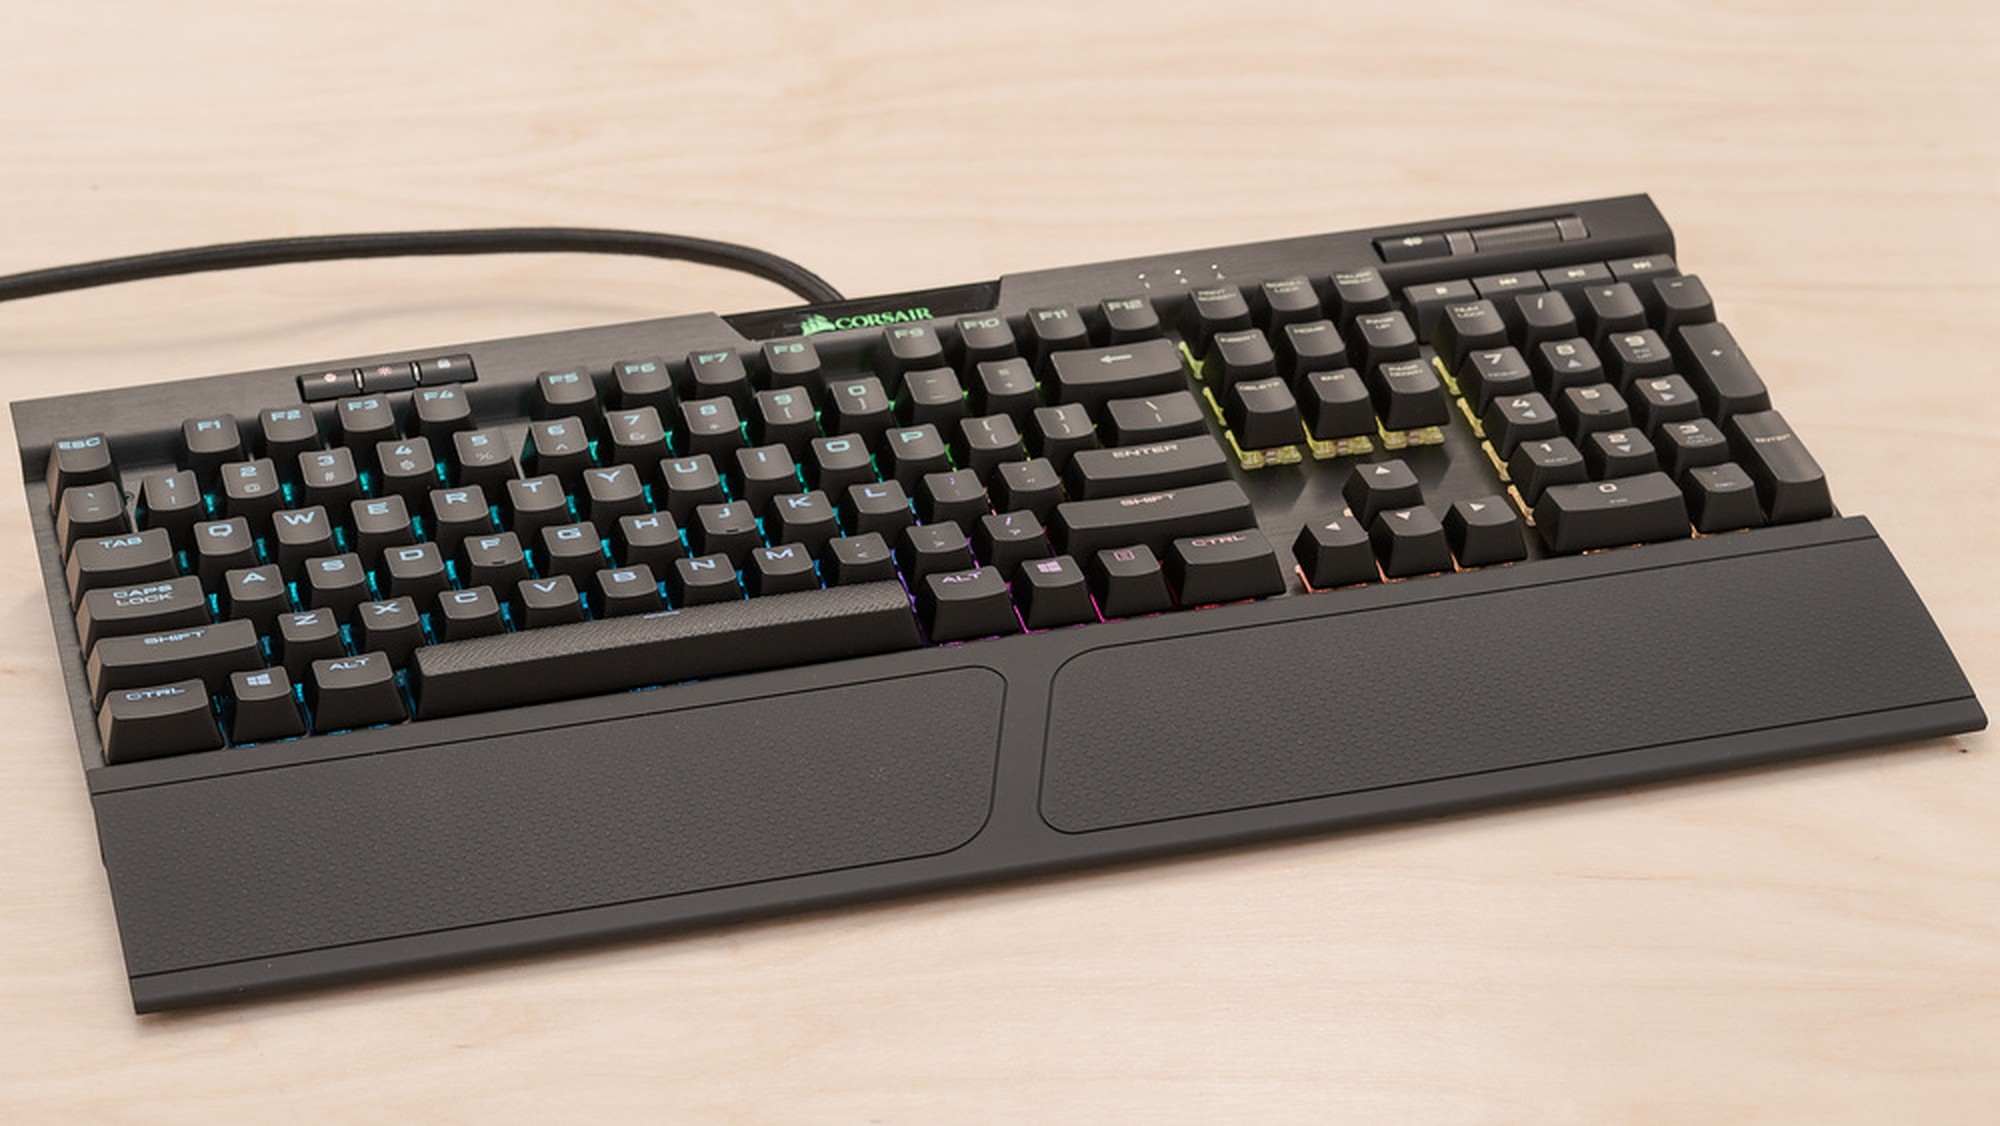 Corsair Gaming Keyboard